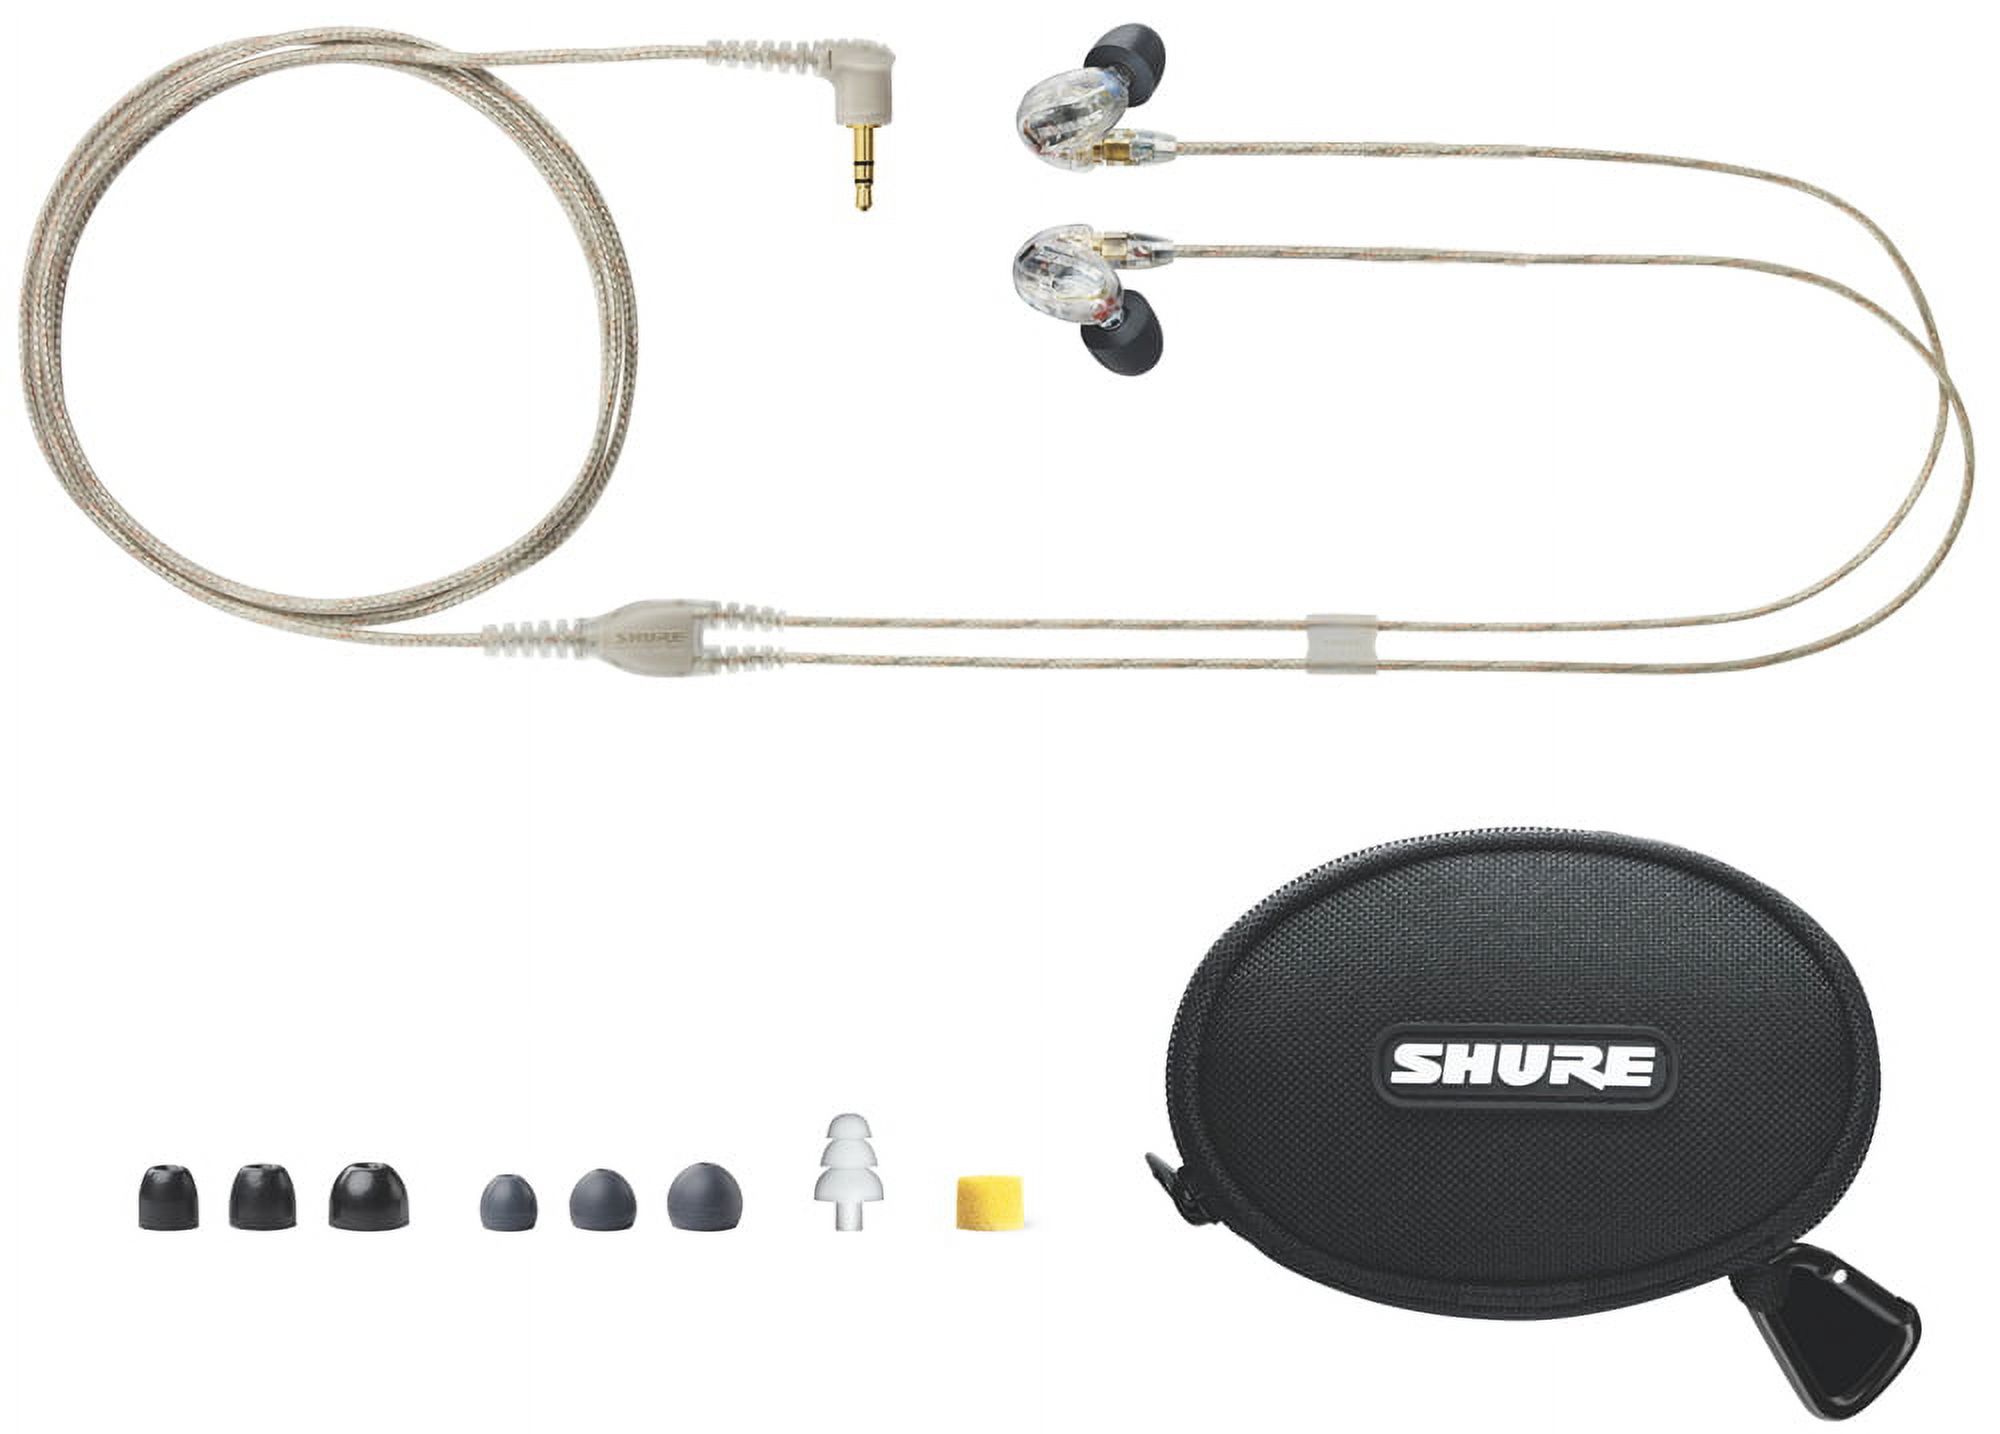 Shure SE315 Sound Isolating Earphones - image 2 of 2